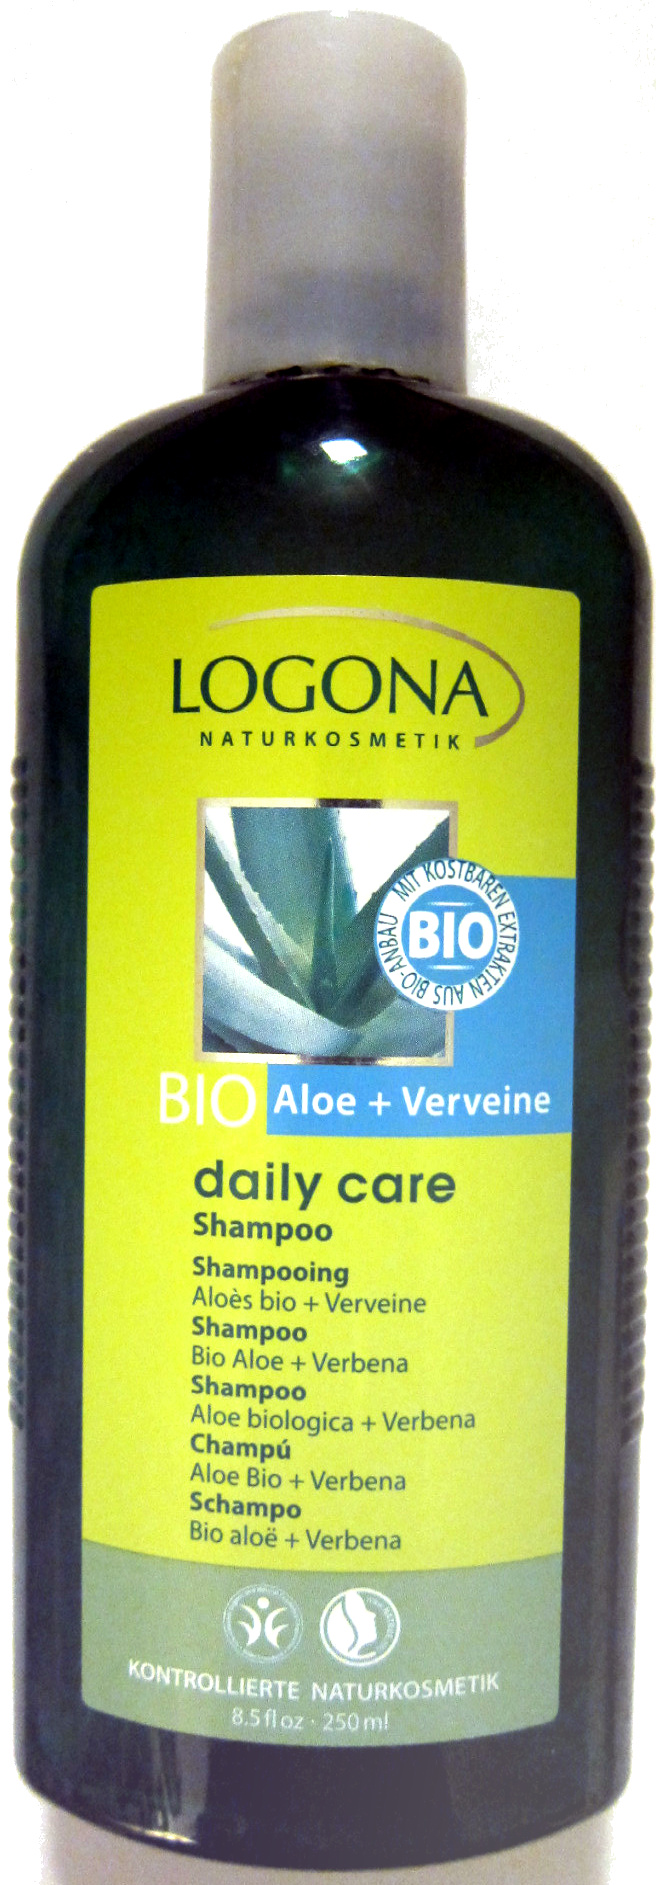 Shampoing Logona BIO Aloe + Verveine Daily Care - Product - fr